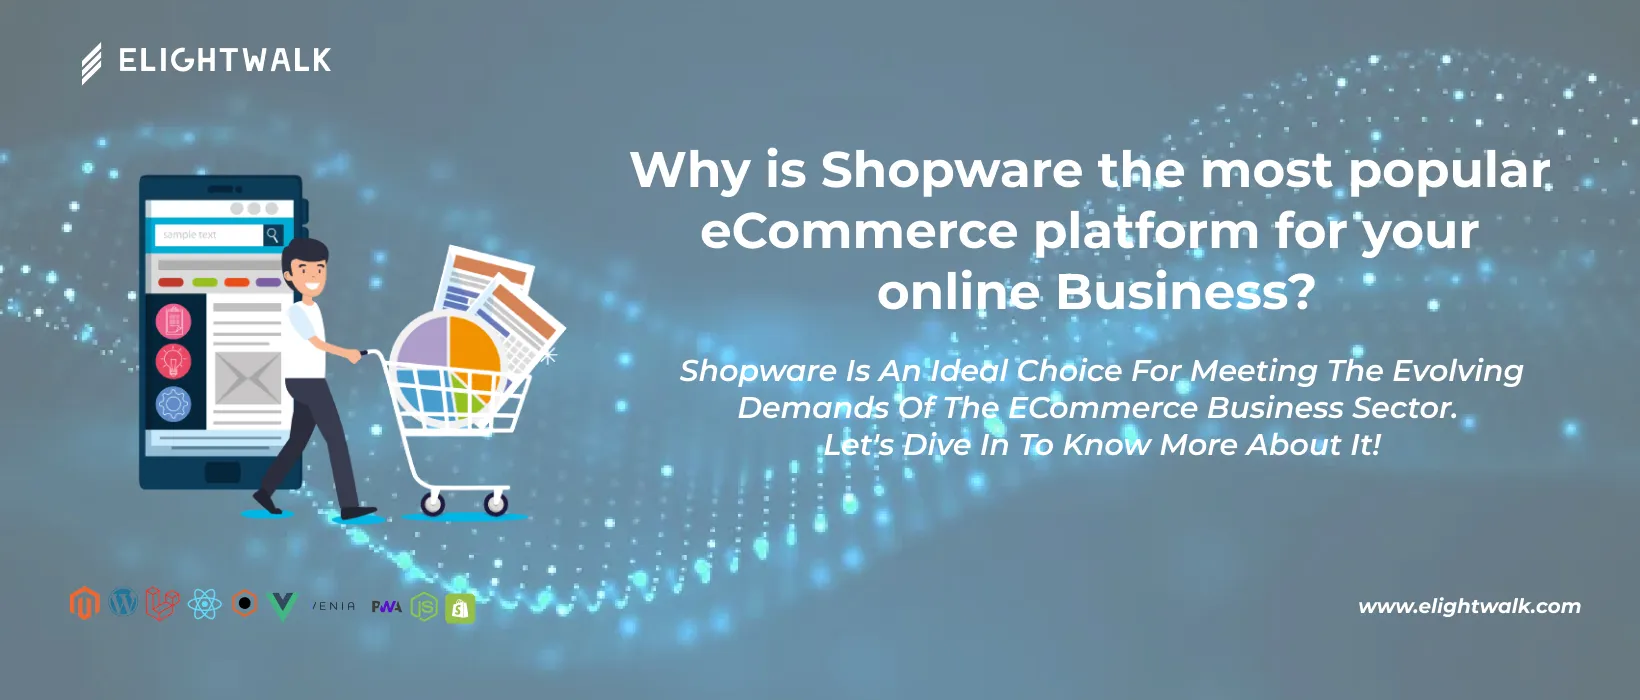 shopware most popular ecommerce platfrom